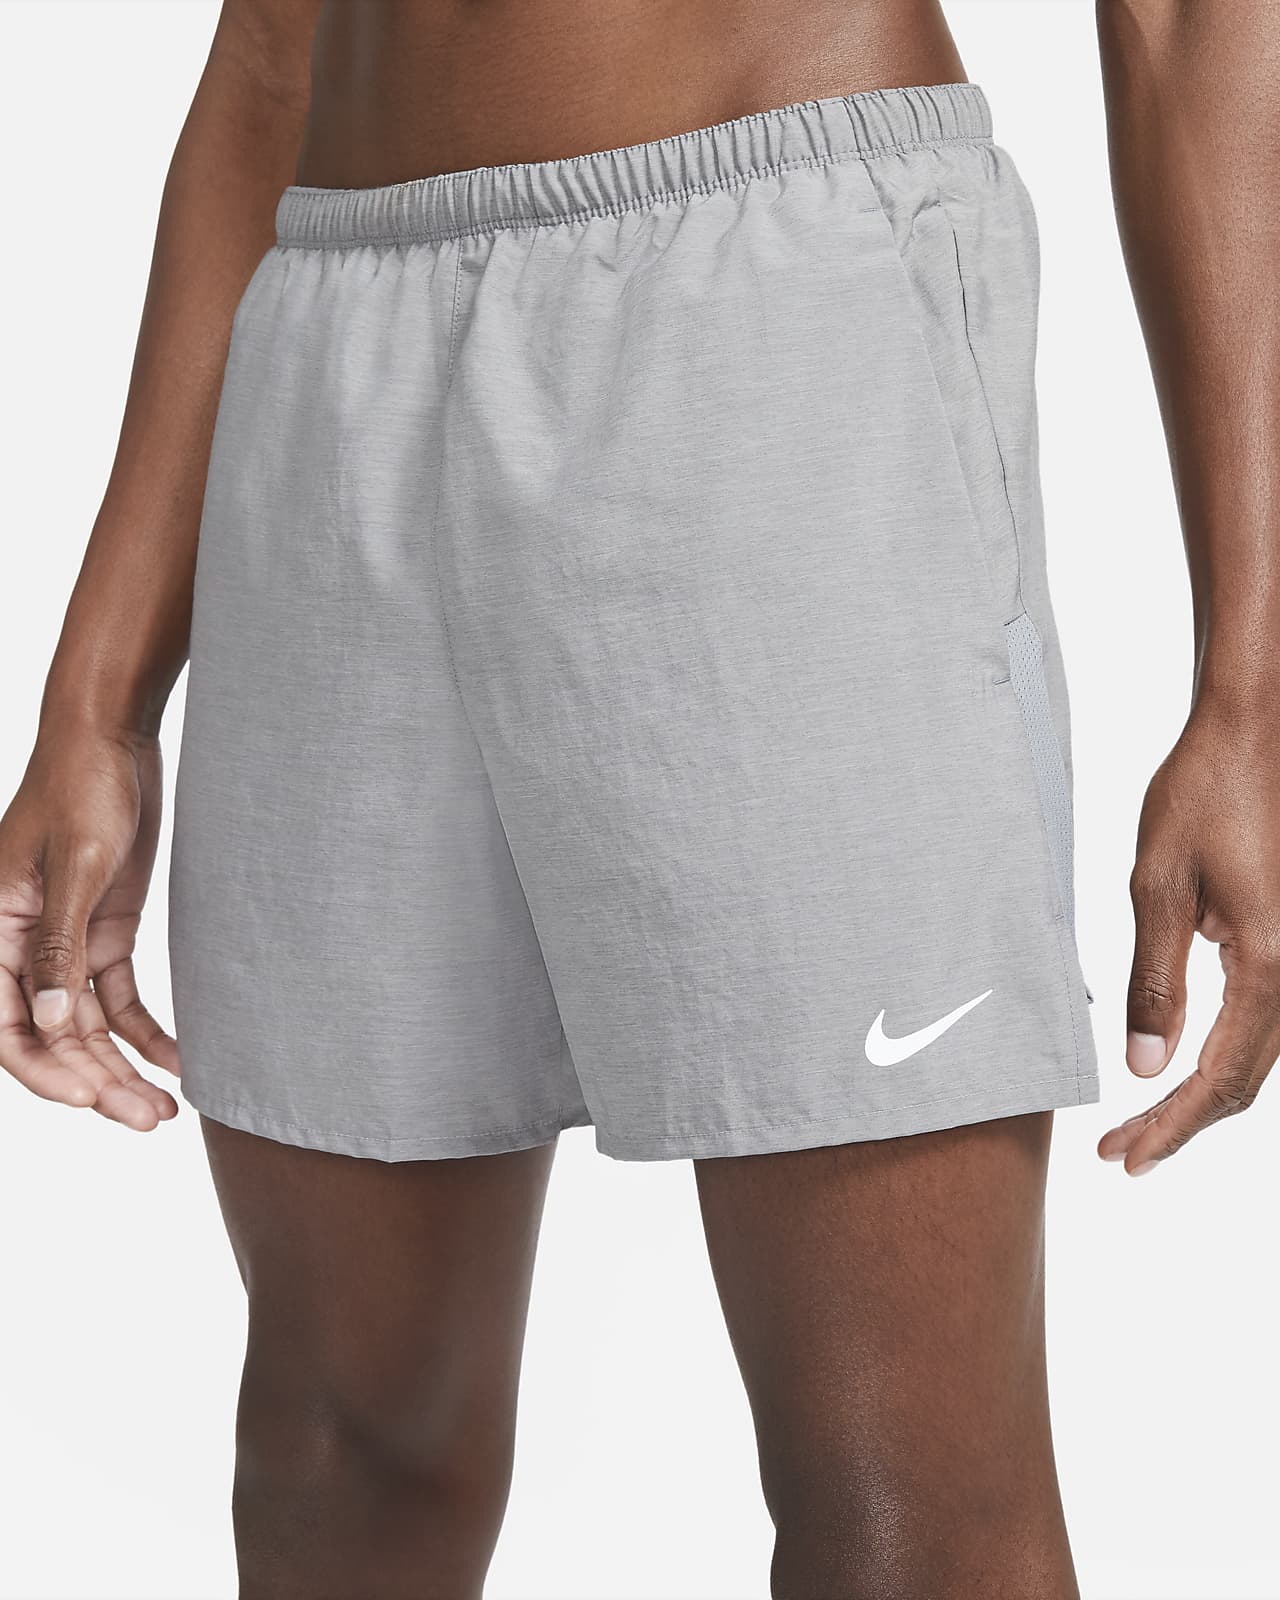 Nike公式 ナイキ チャレンジャー メンズ ランニングショートパンツ インナー付き オンラインストア 通販サイト